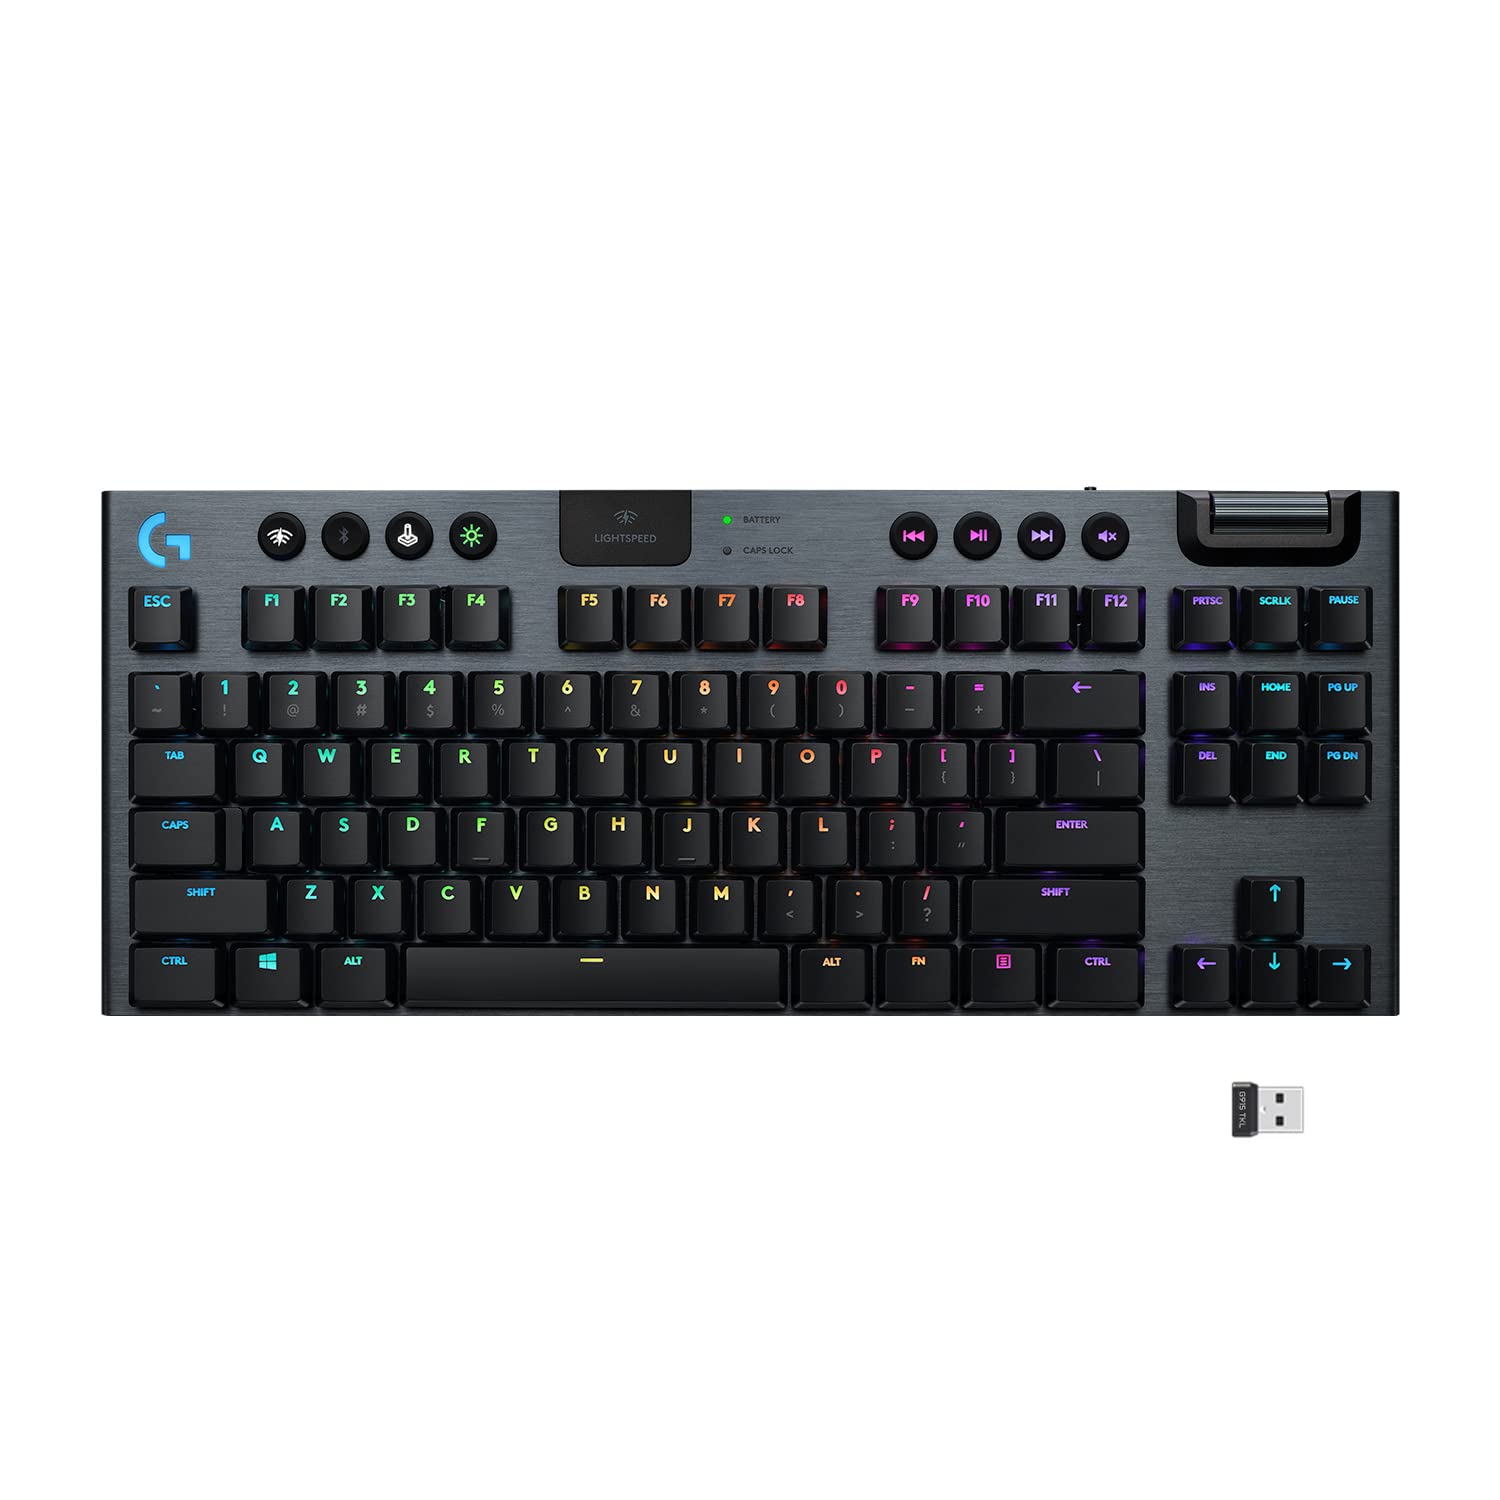 Logitech G915 TKL Lightspeed Wireless RGB Mechanical Gaming Keyboard w/ USB Extender & Cable (Black & Tactile) $119.50 + Free Shipping